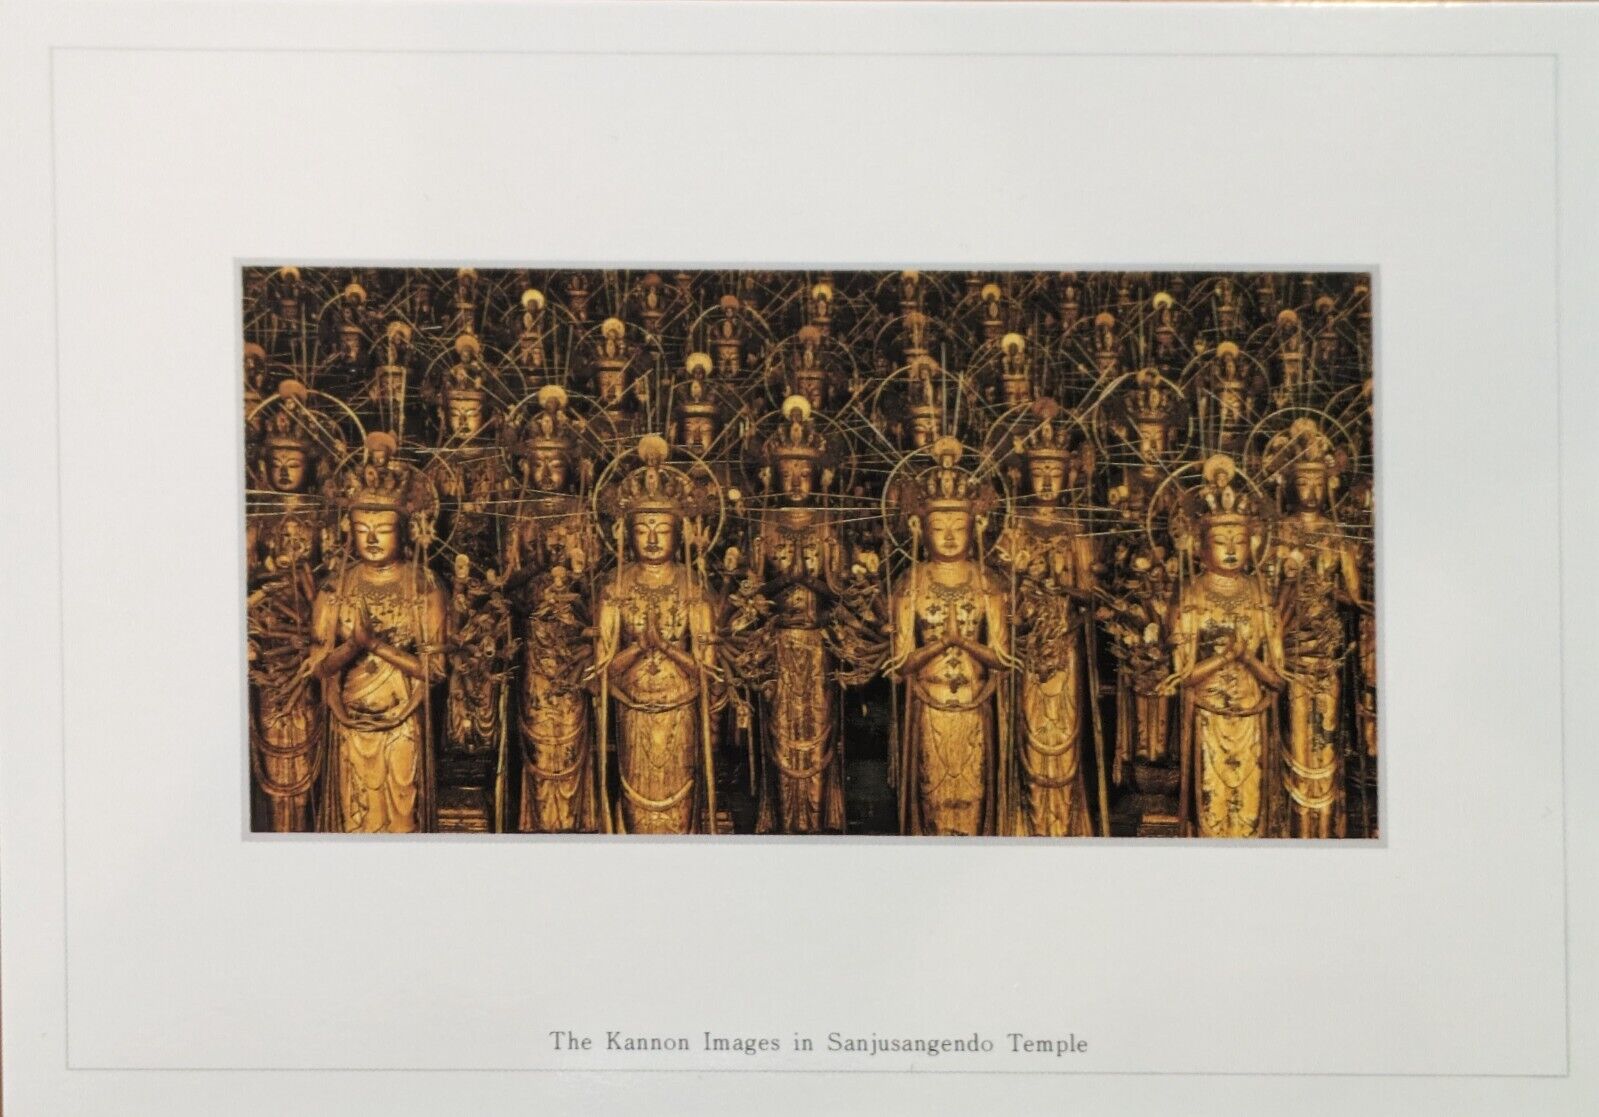 Postcard (The Kannon Images in Sanjusangendo Temple)